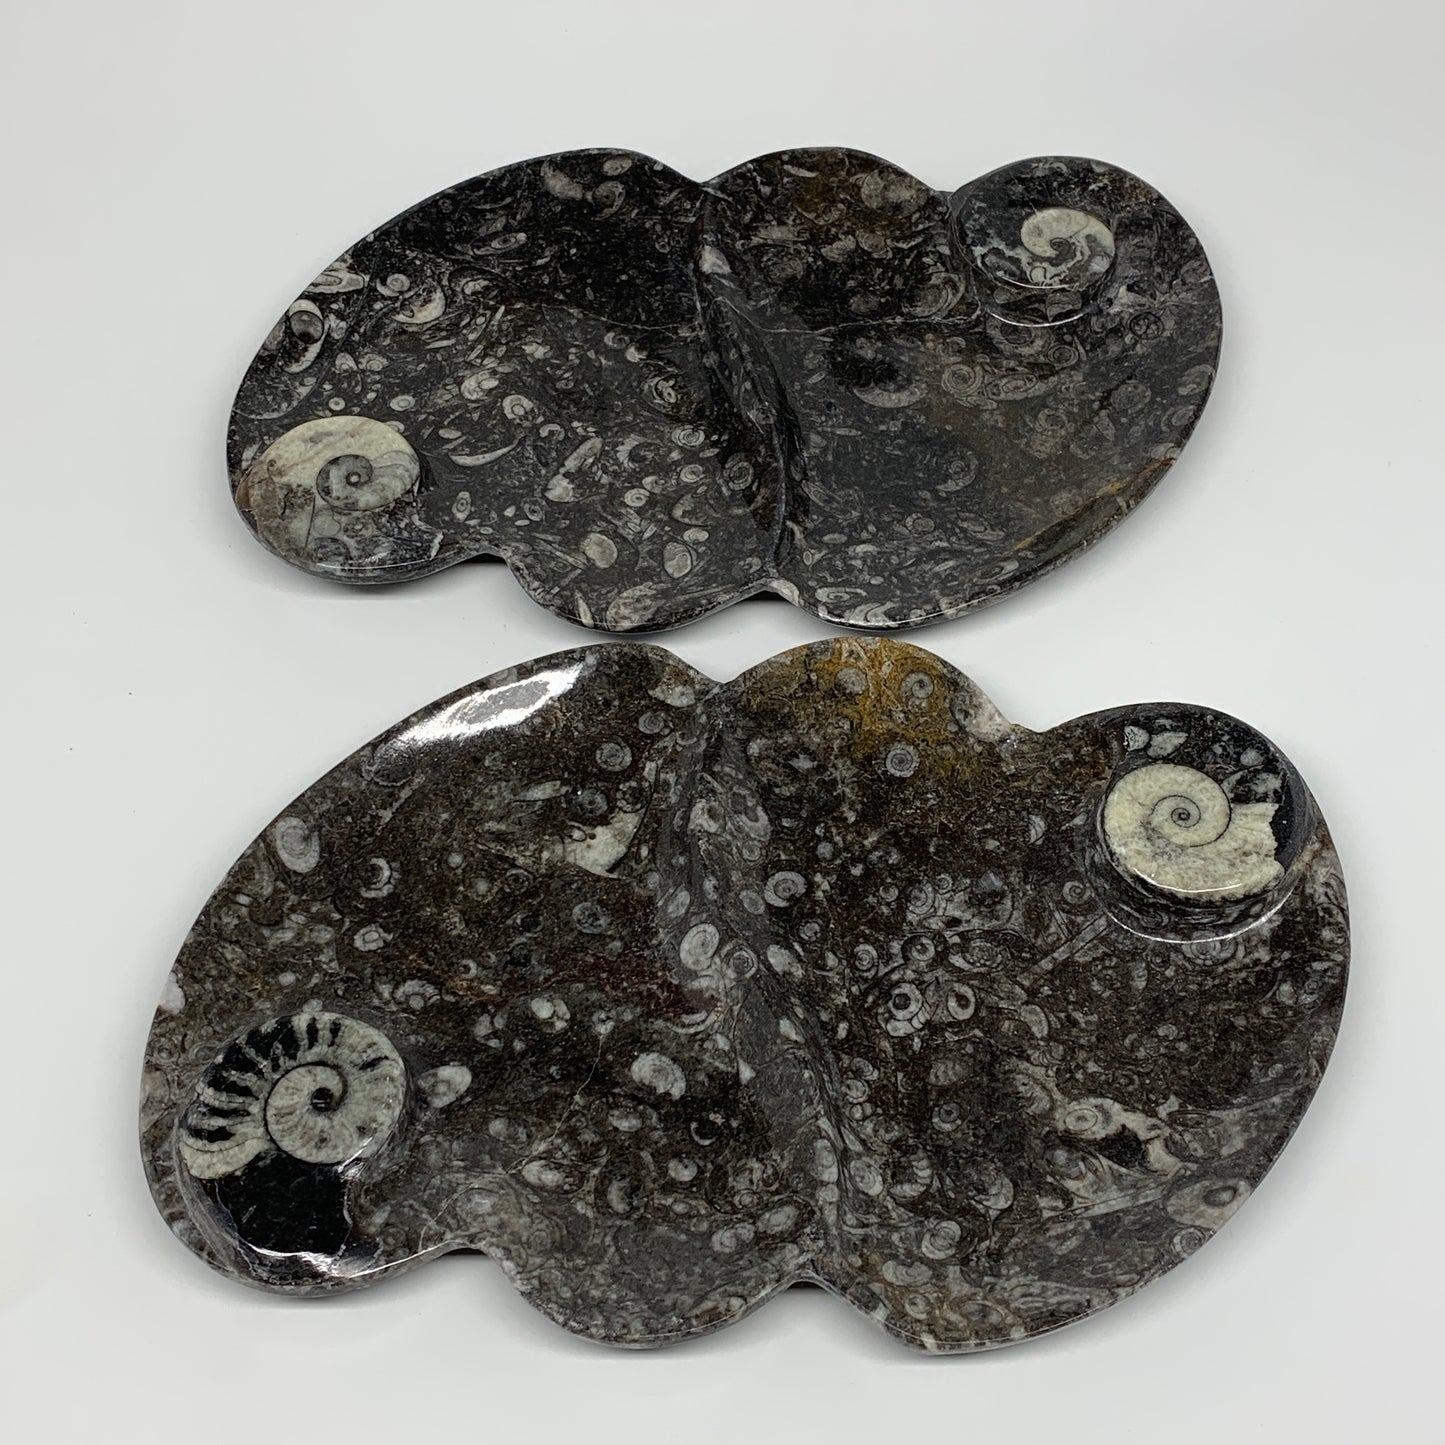 2pcs Set,8.5"x5.5" Double Heart Fossils Orthoceras Ammonite Bowls @Morocco,B8493